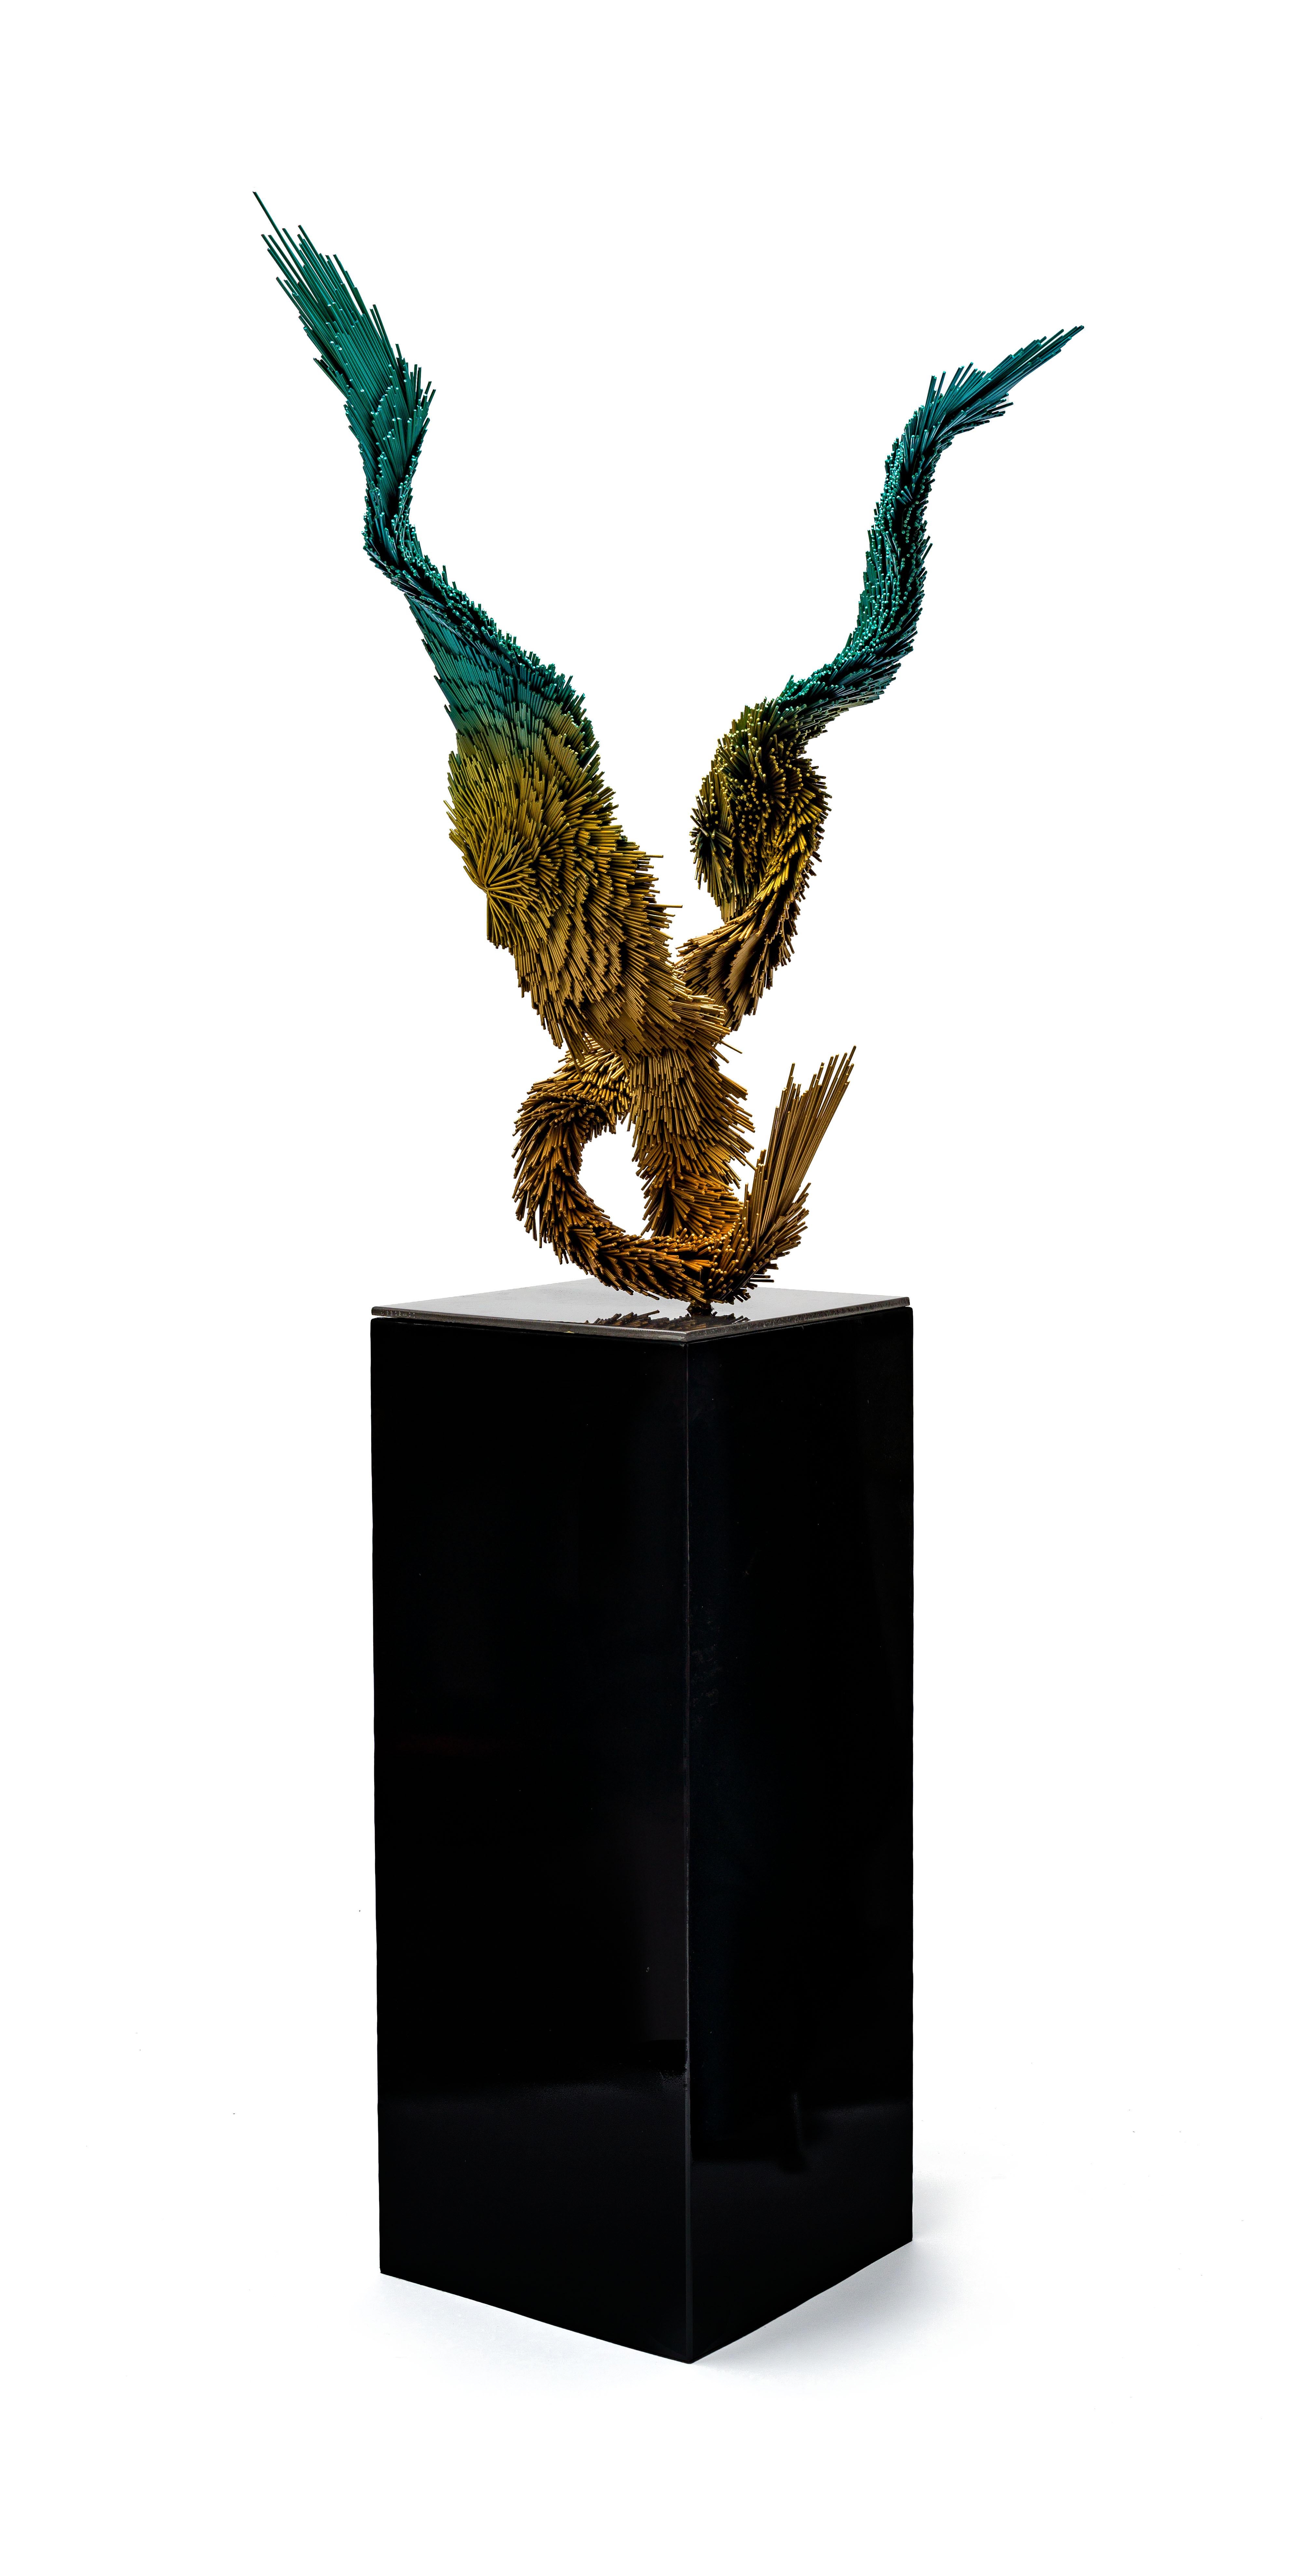 Greene & Greene, Sculpture d'oiseau contemporaine en acier jaune et vert